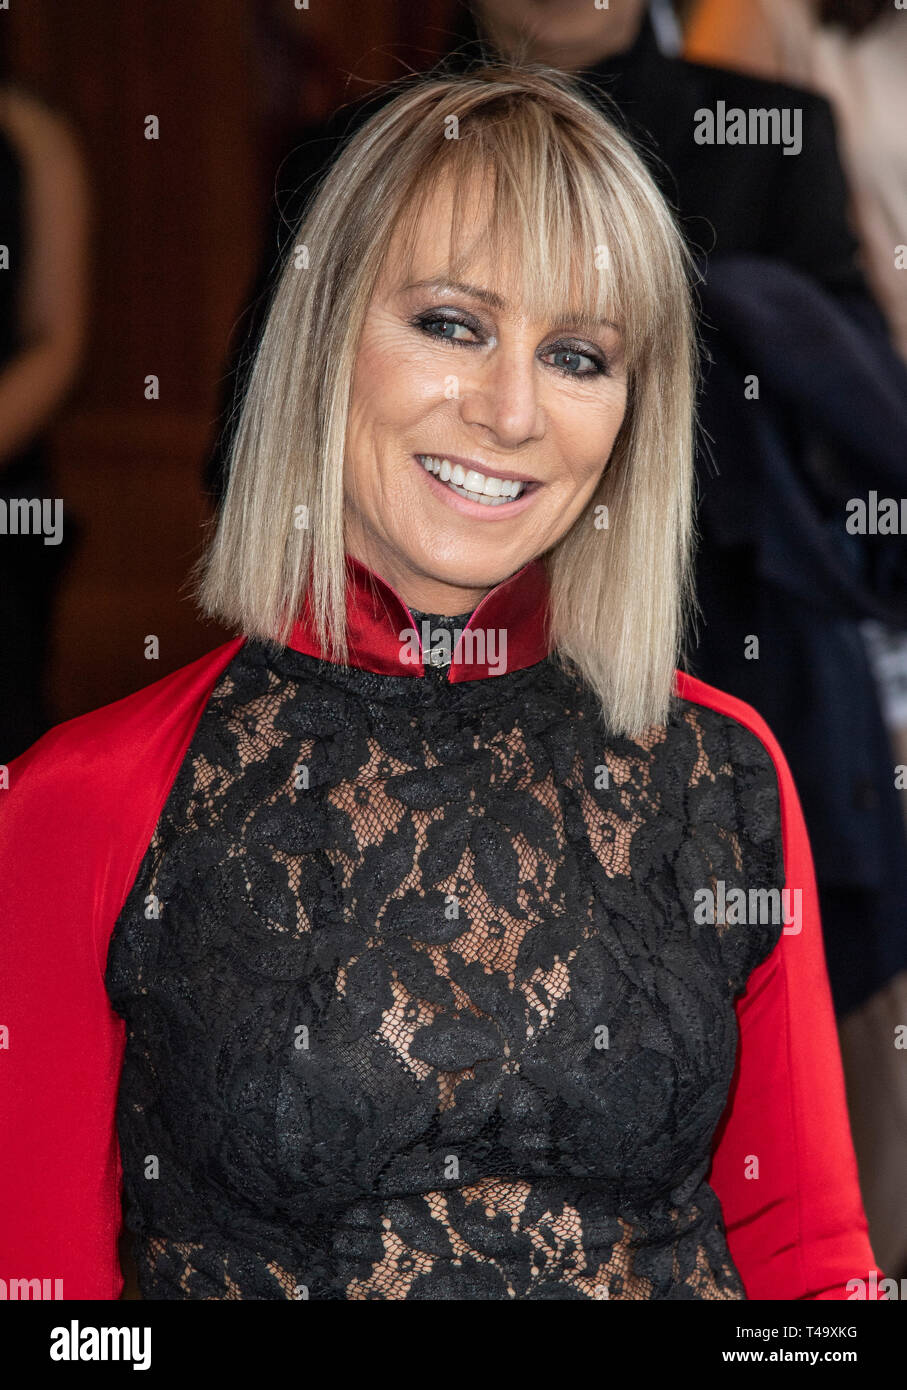 Karen Millen visto durante l'Asian Awards 2019 al Grosvenor House Hotel di Londra. Foto Stock